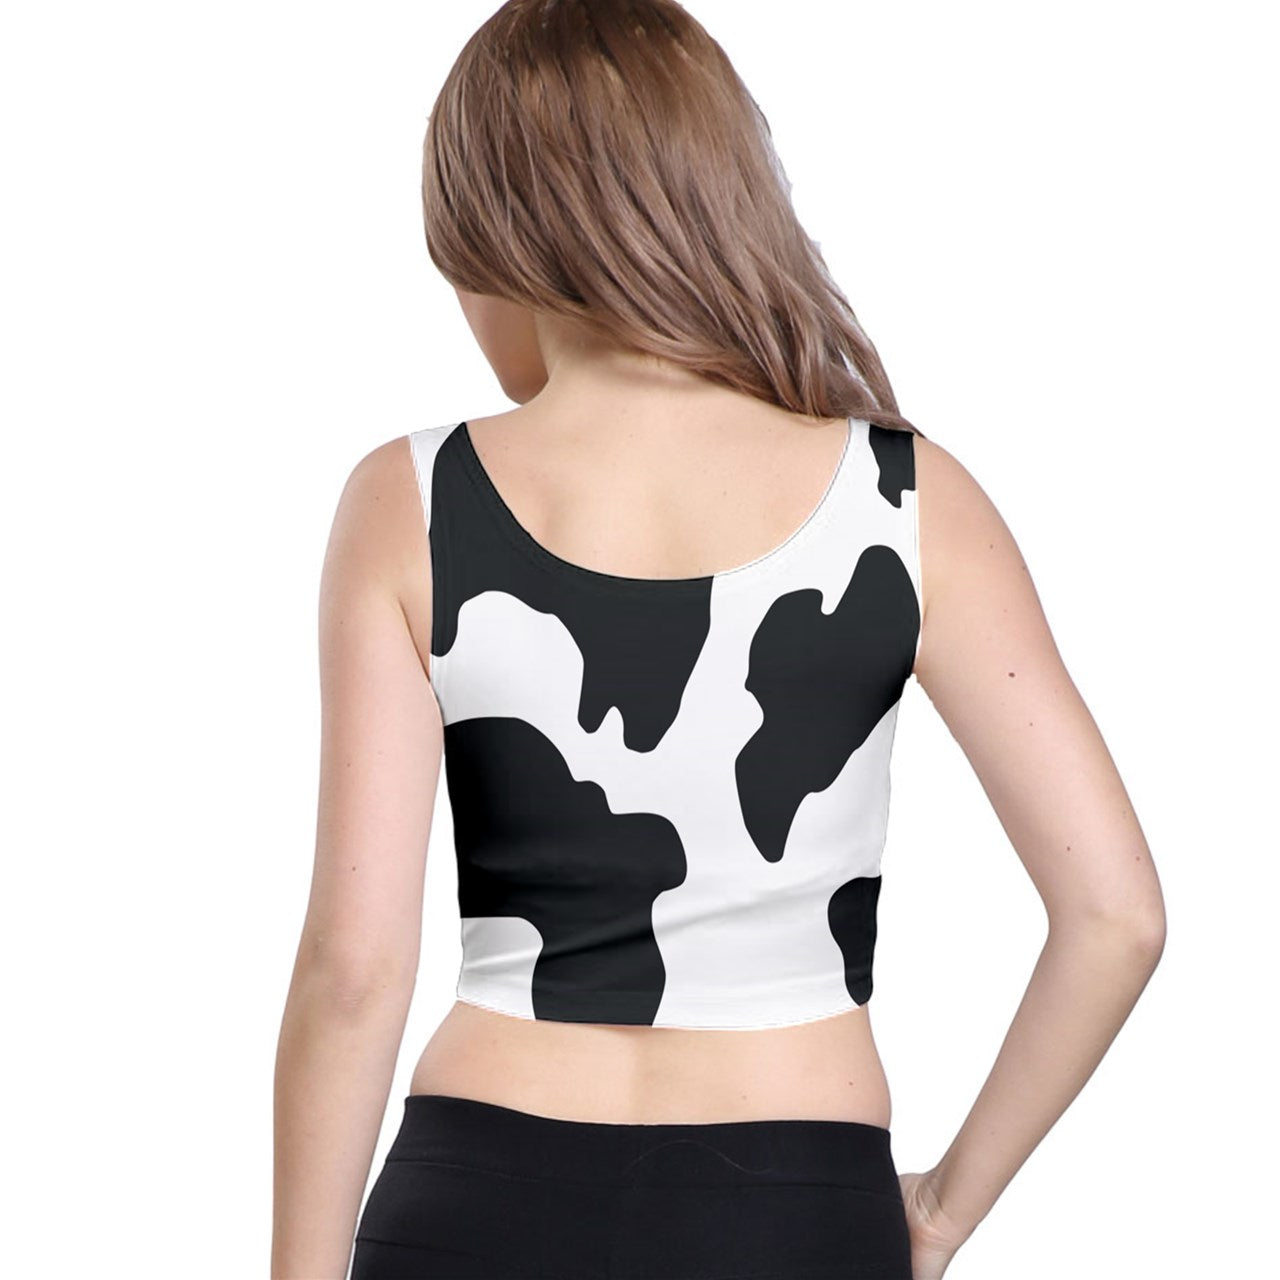 Cow Print Crop Top Tank - Black